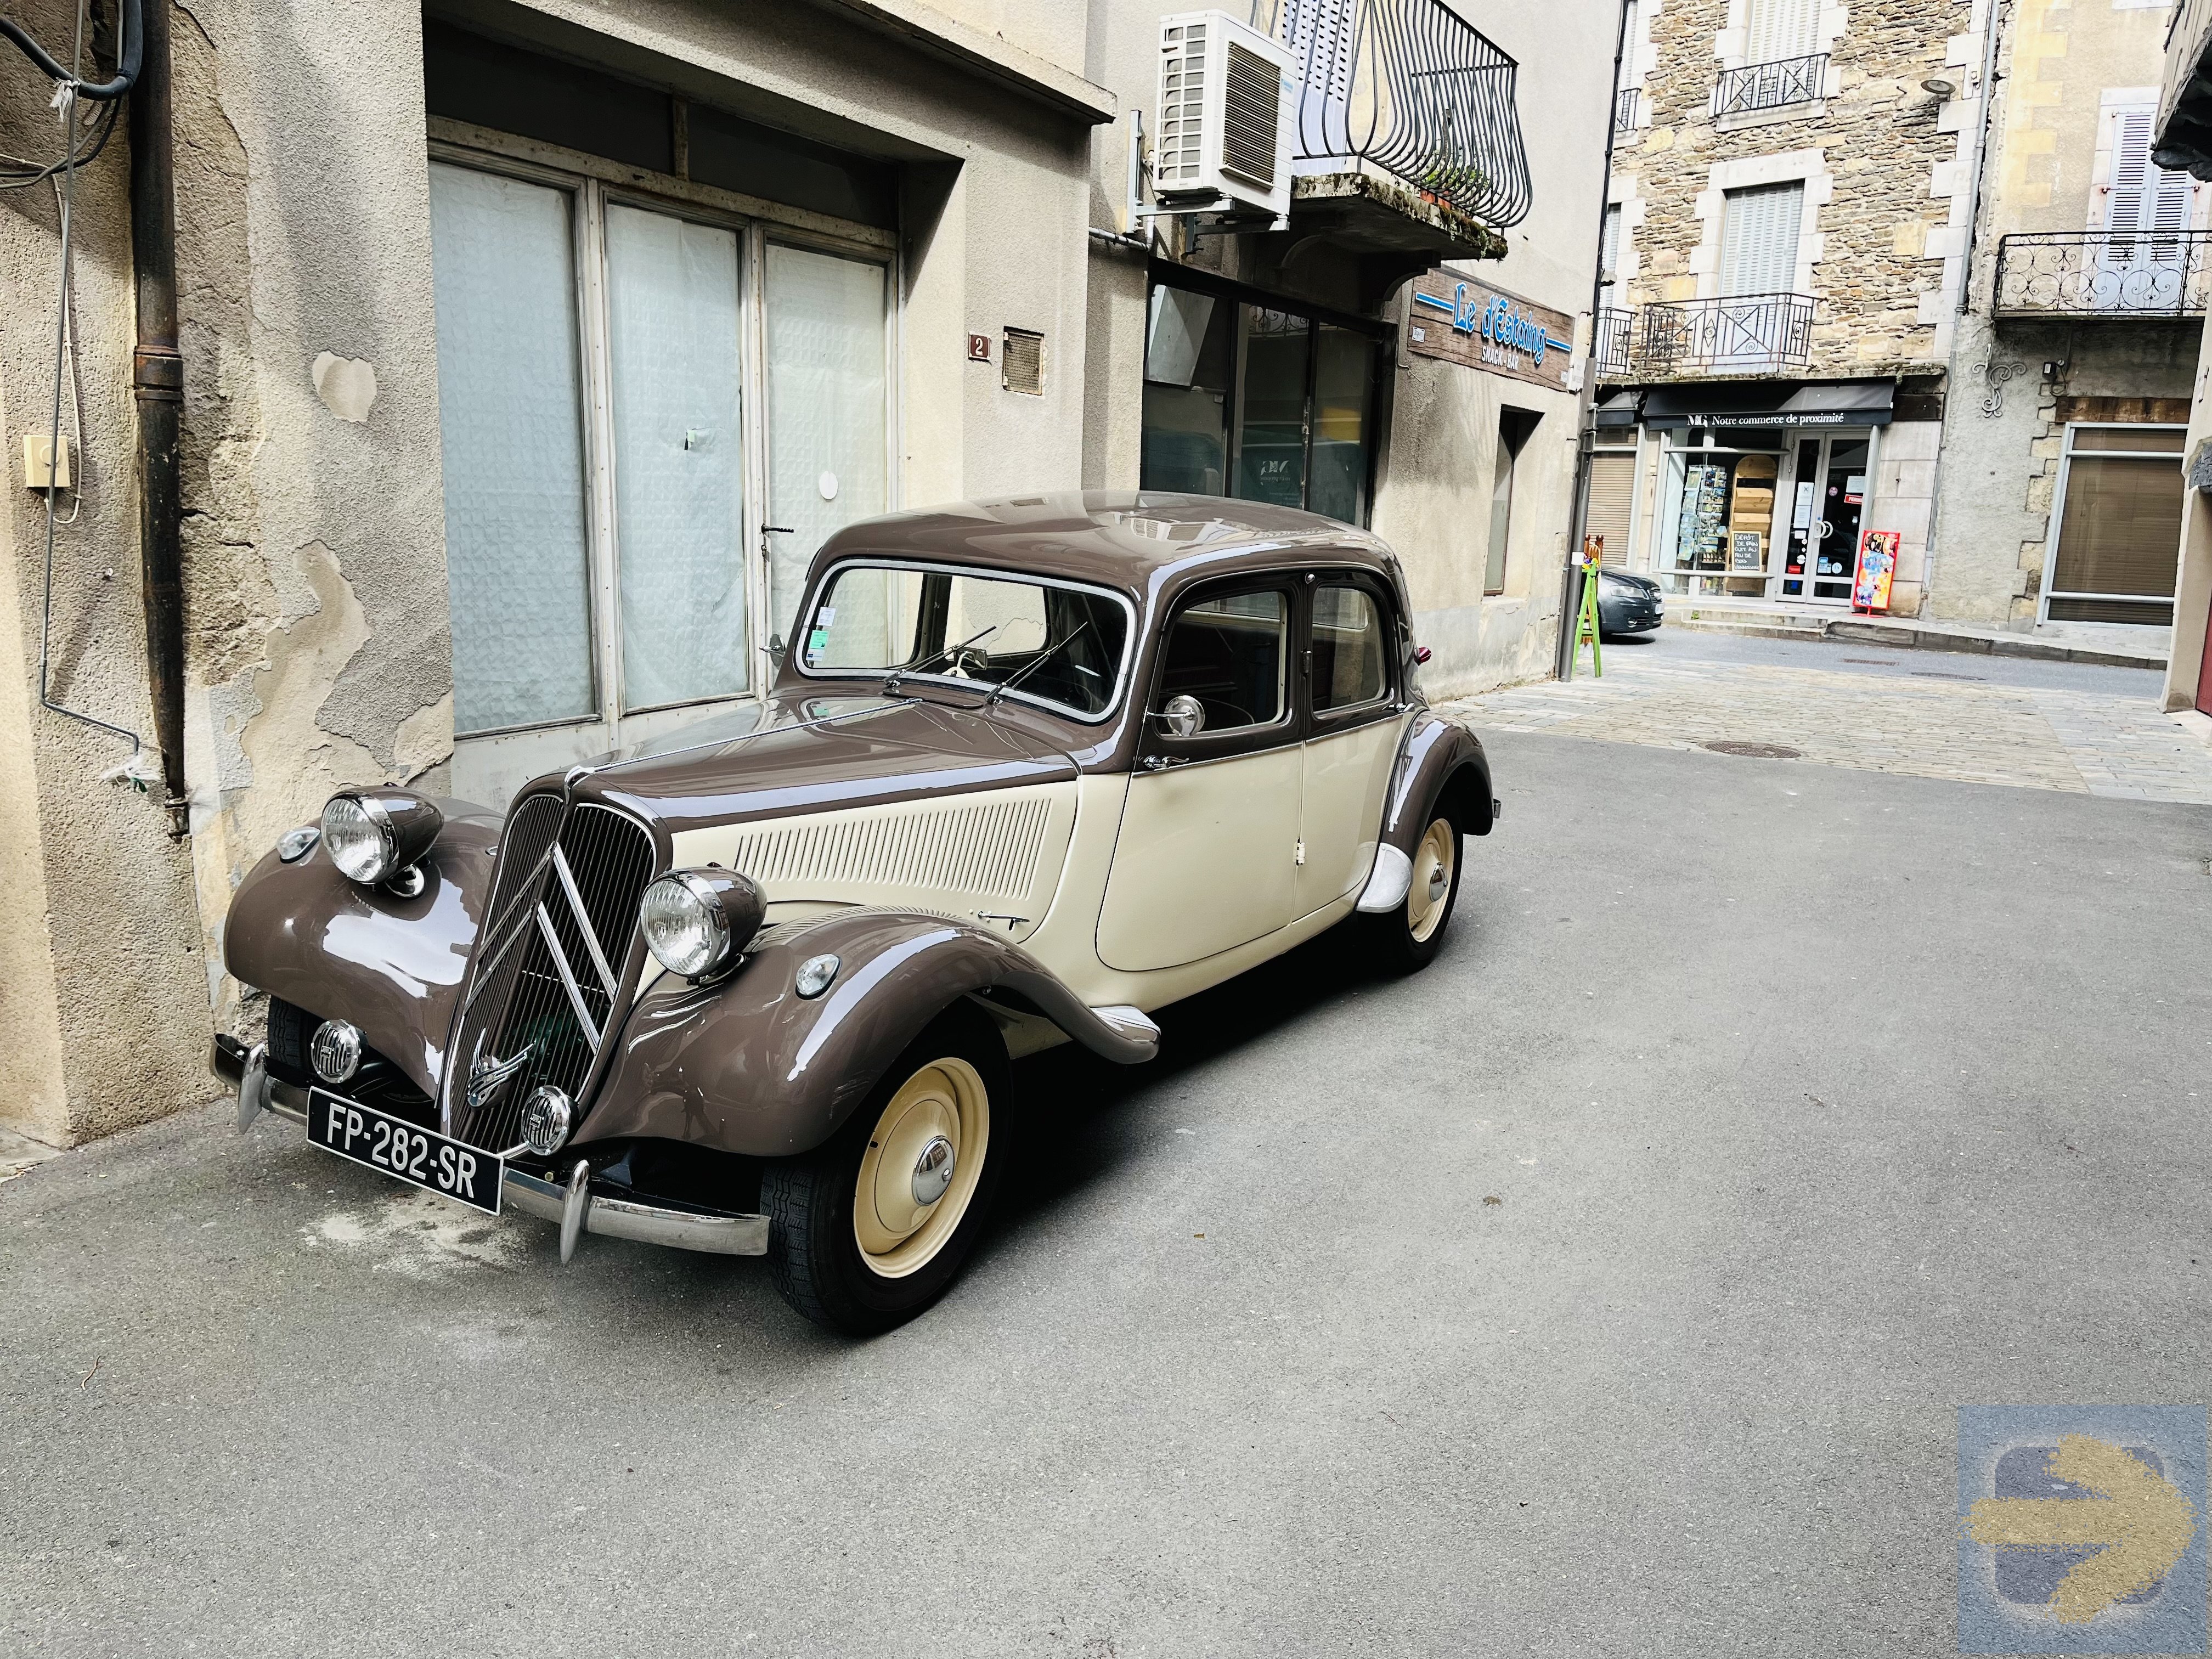 Vintage Car in Espuiac